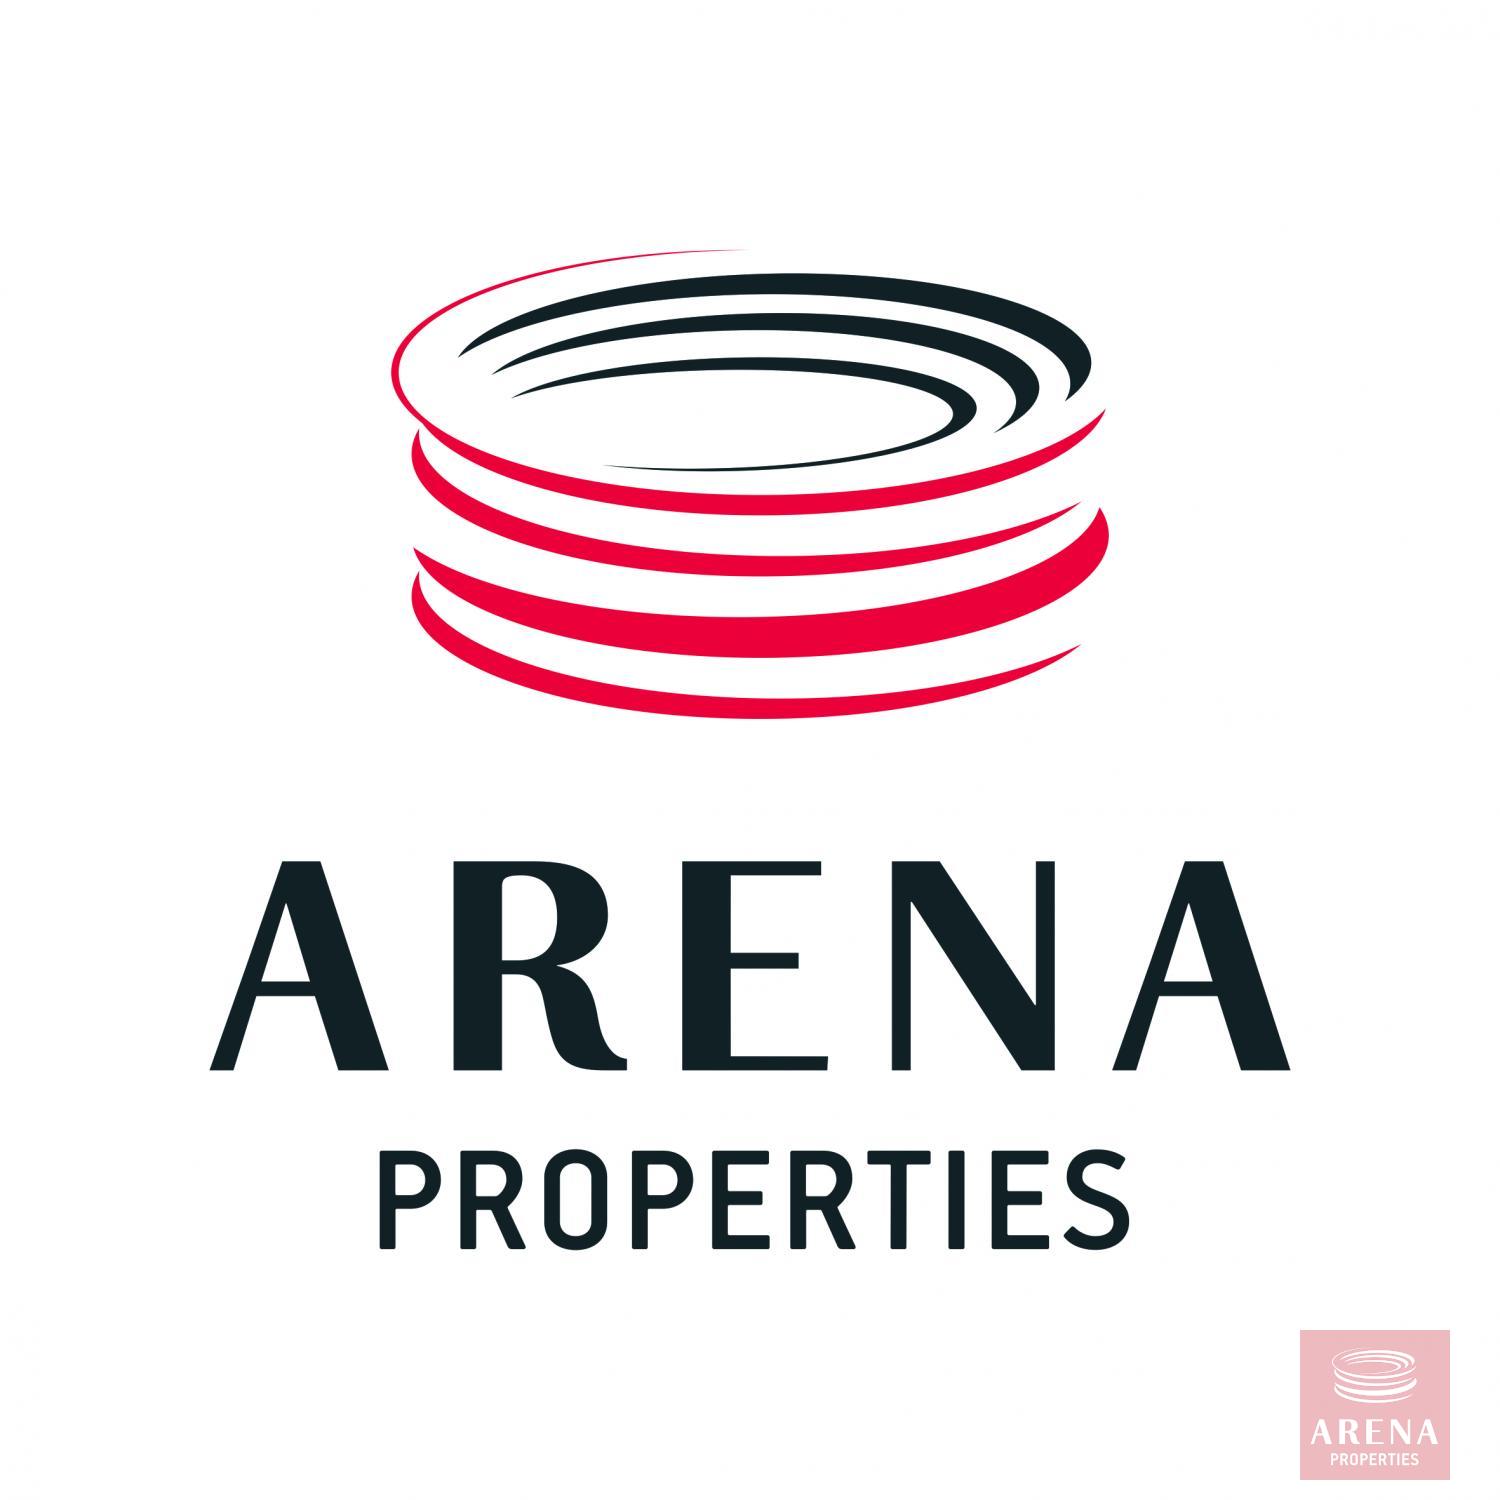 arena properties logo white 7